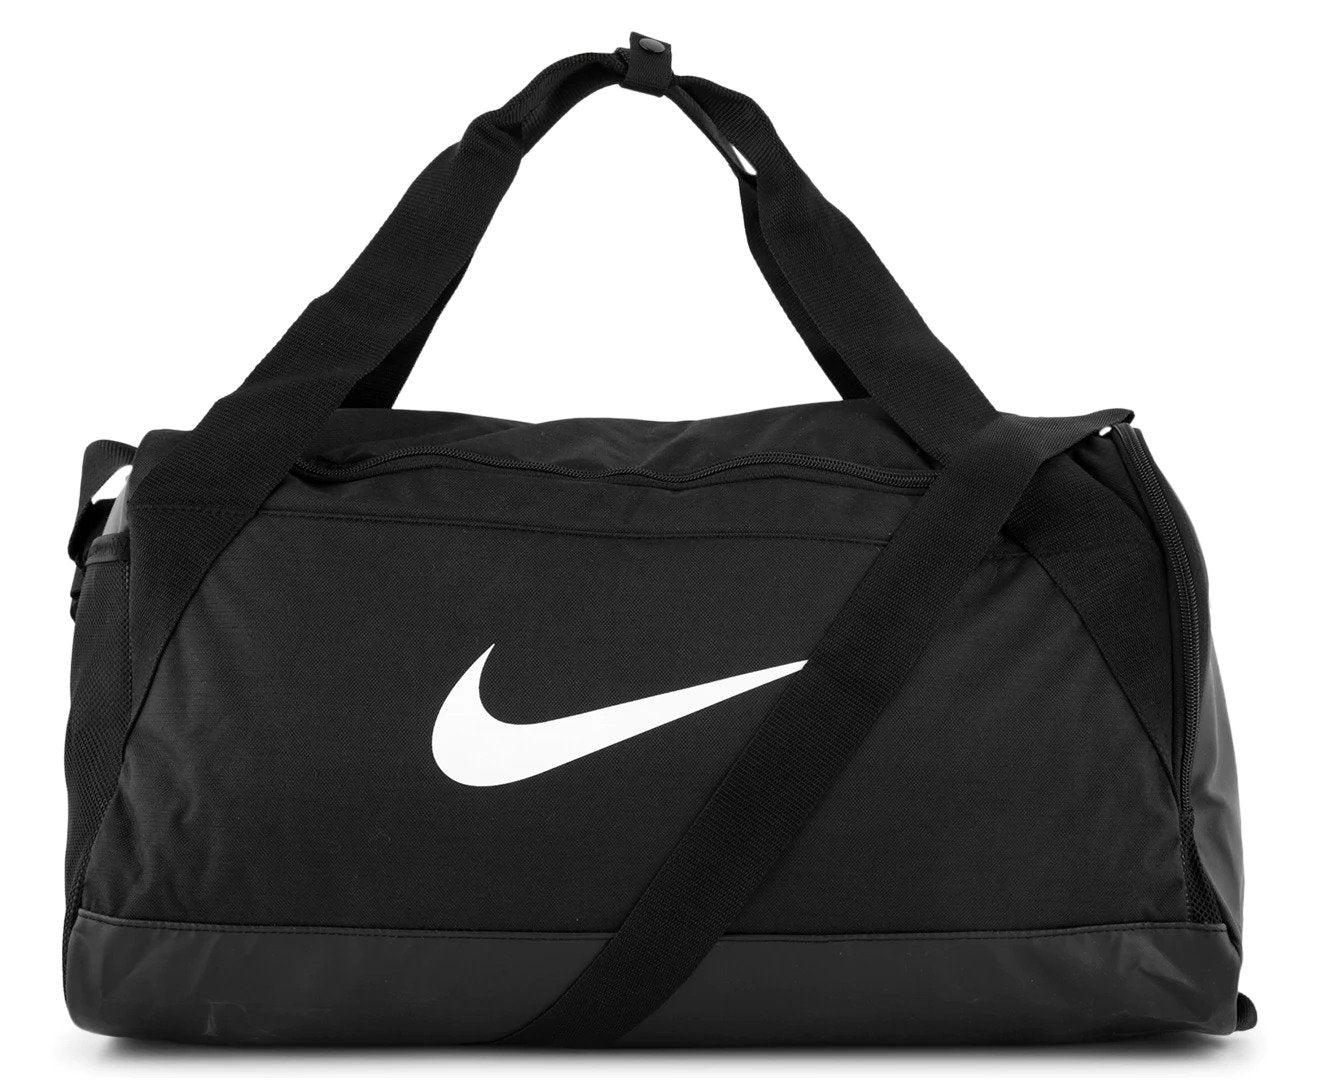 Nike Brasilia Small Duffle Bag - Black/White